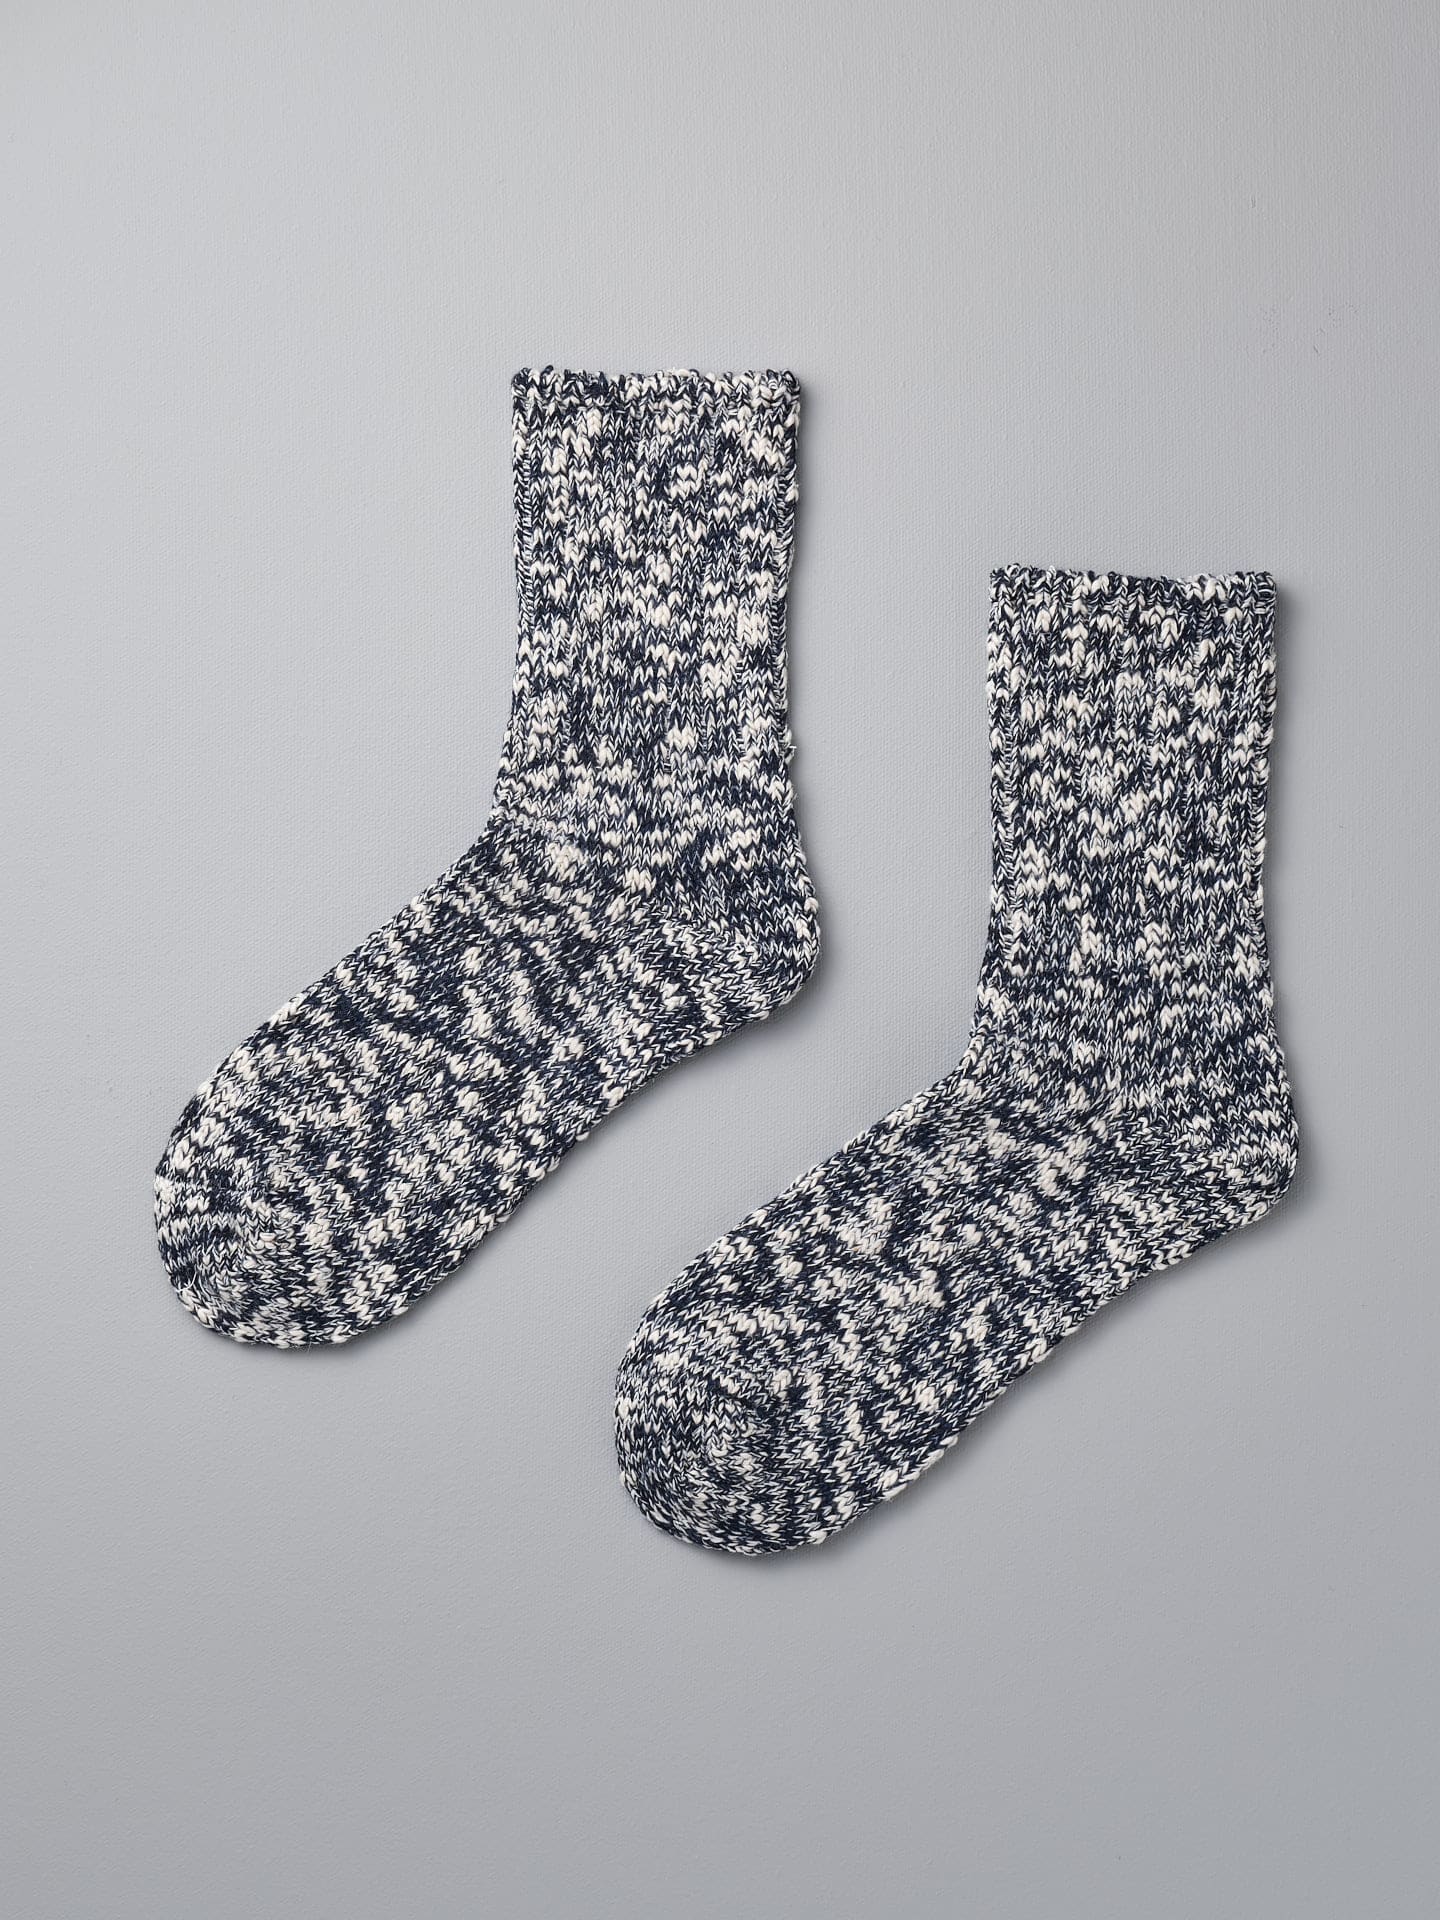 A pair of Japanese Slub Socks in navy by Mauna Kea on a grey background.